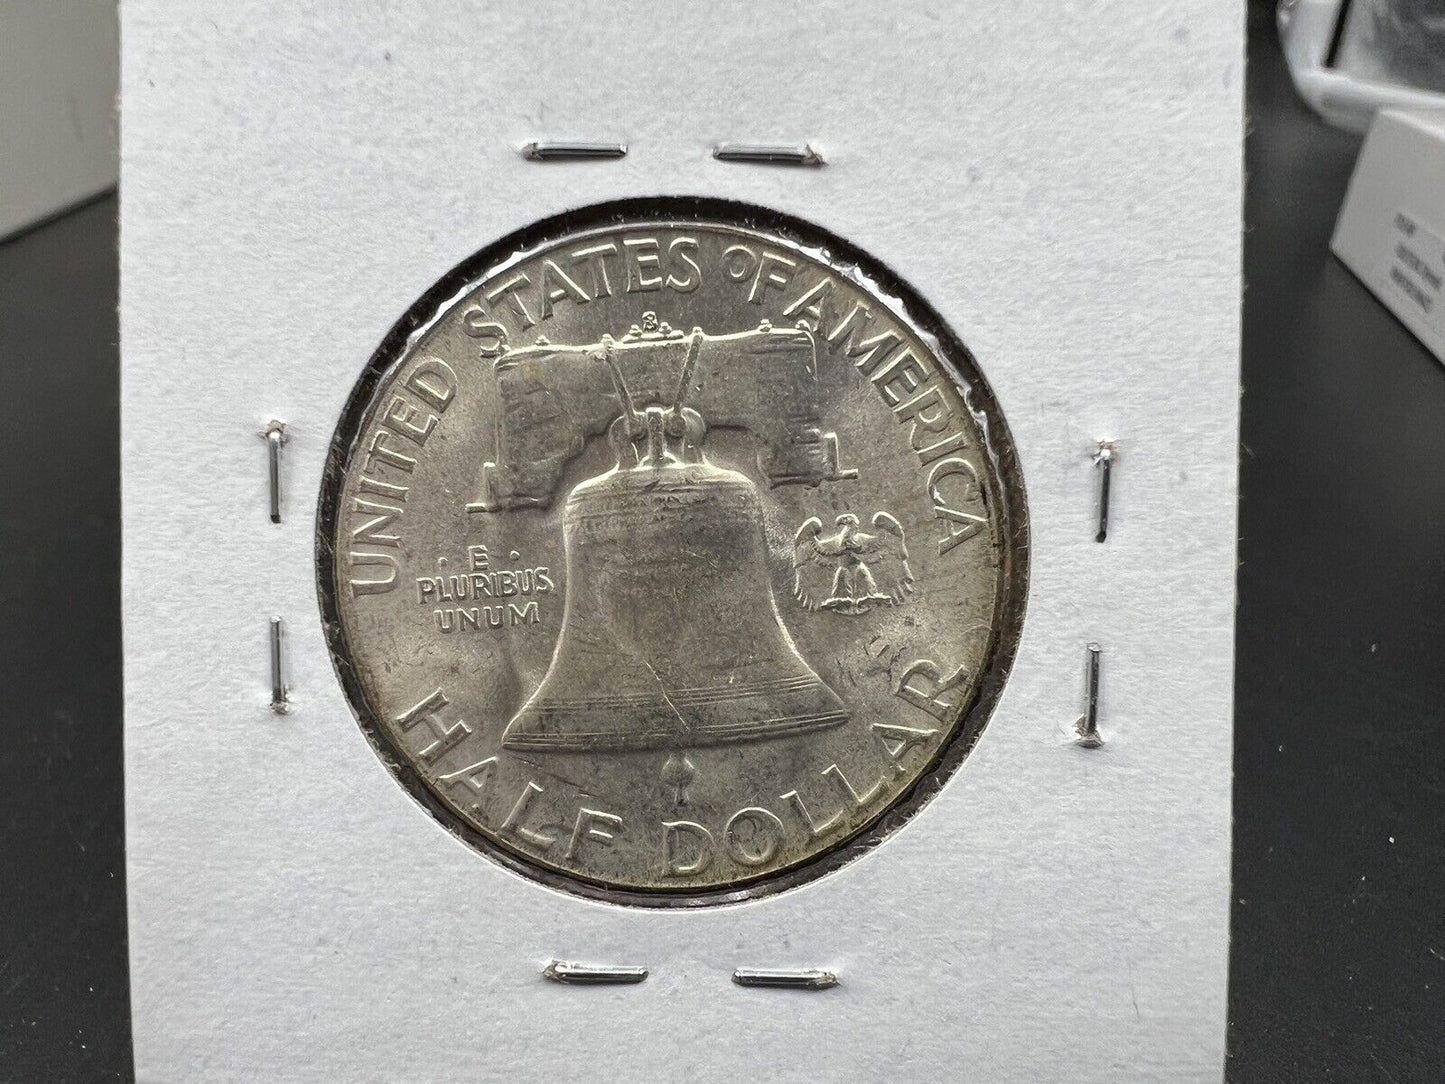 1951 S Franklin Silver Half Dollar Coin BU UNC Neat Toning Toner Die Damage @ MM